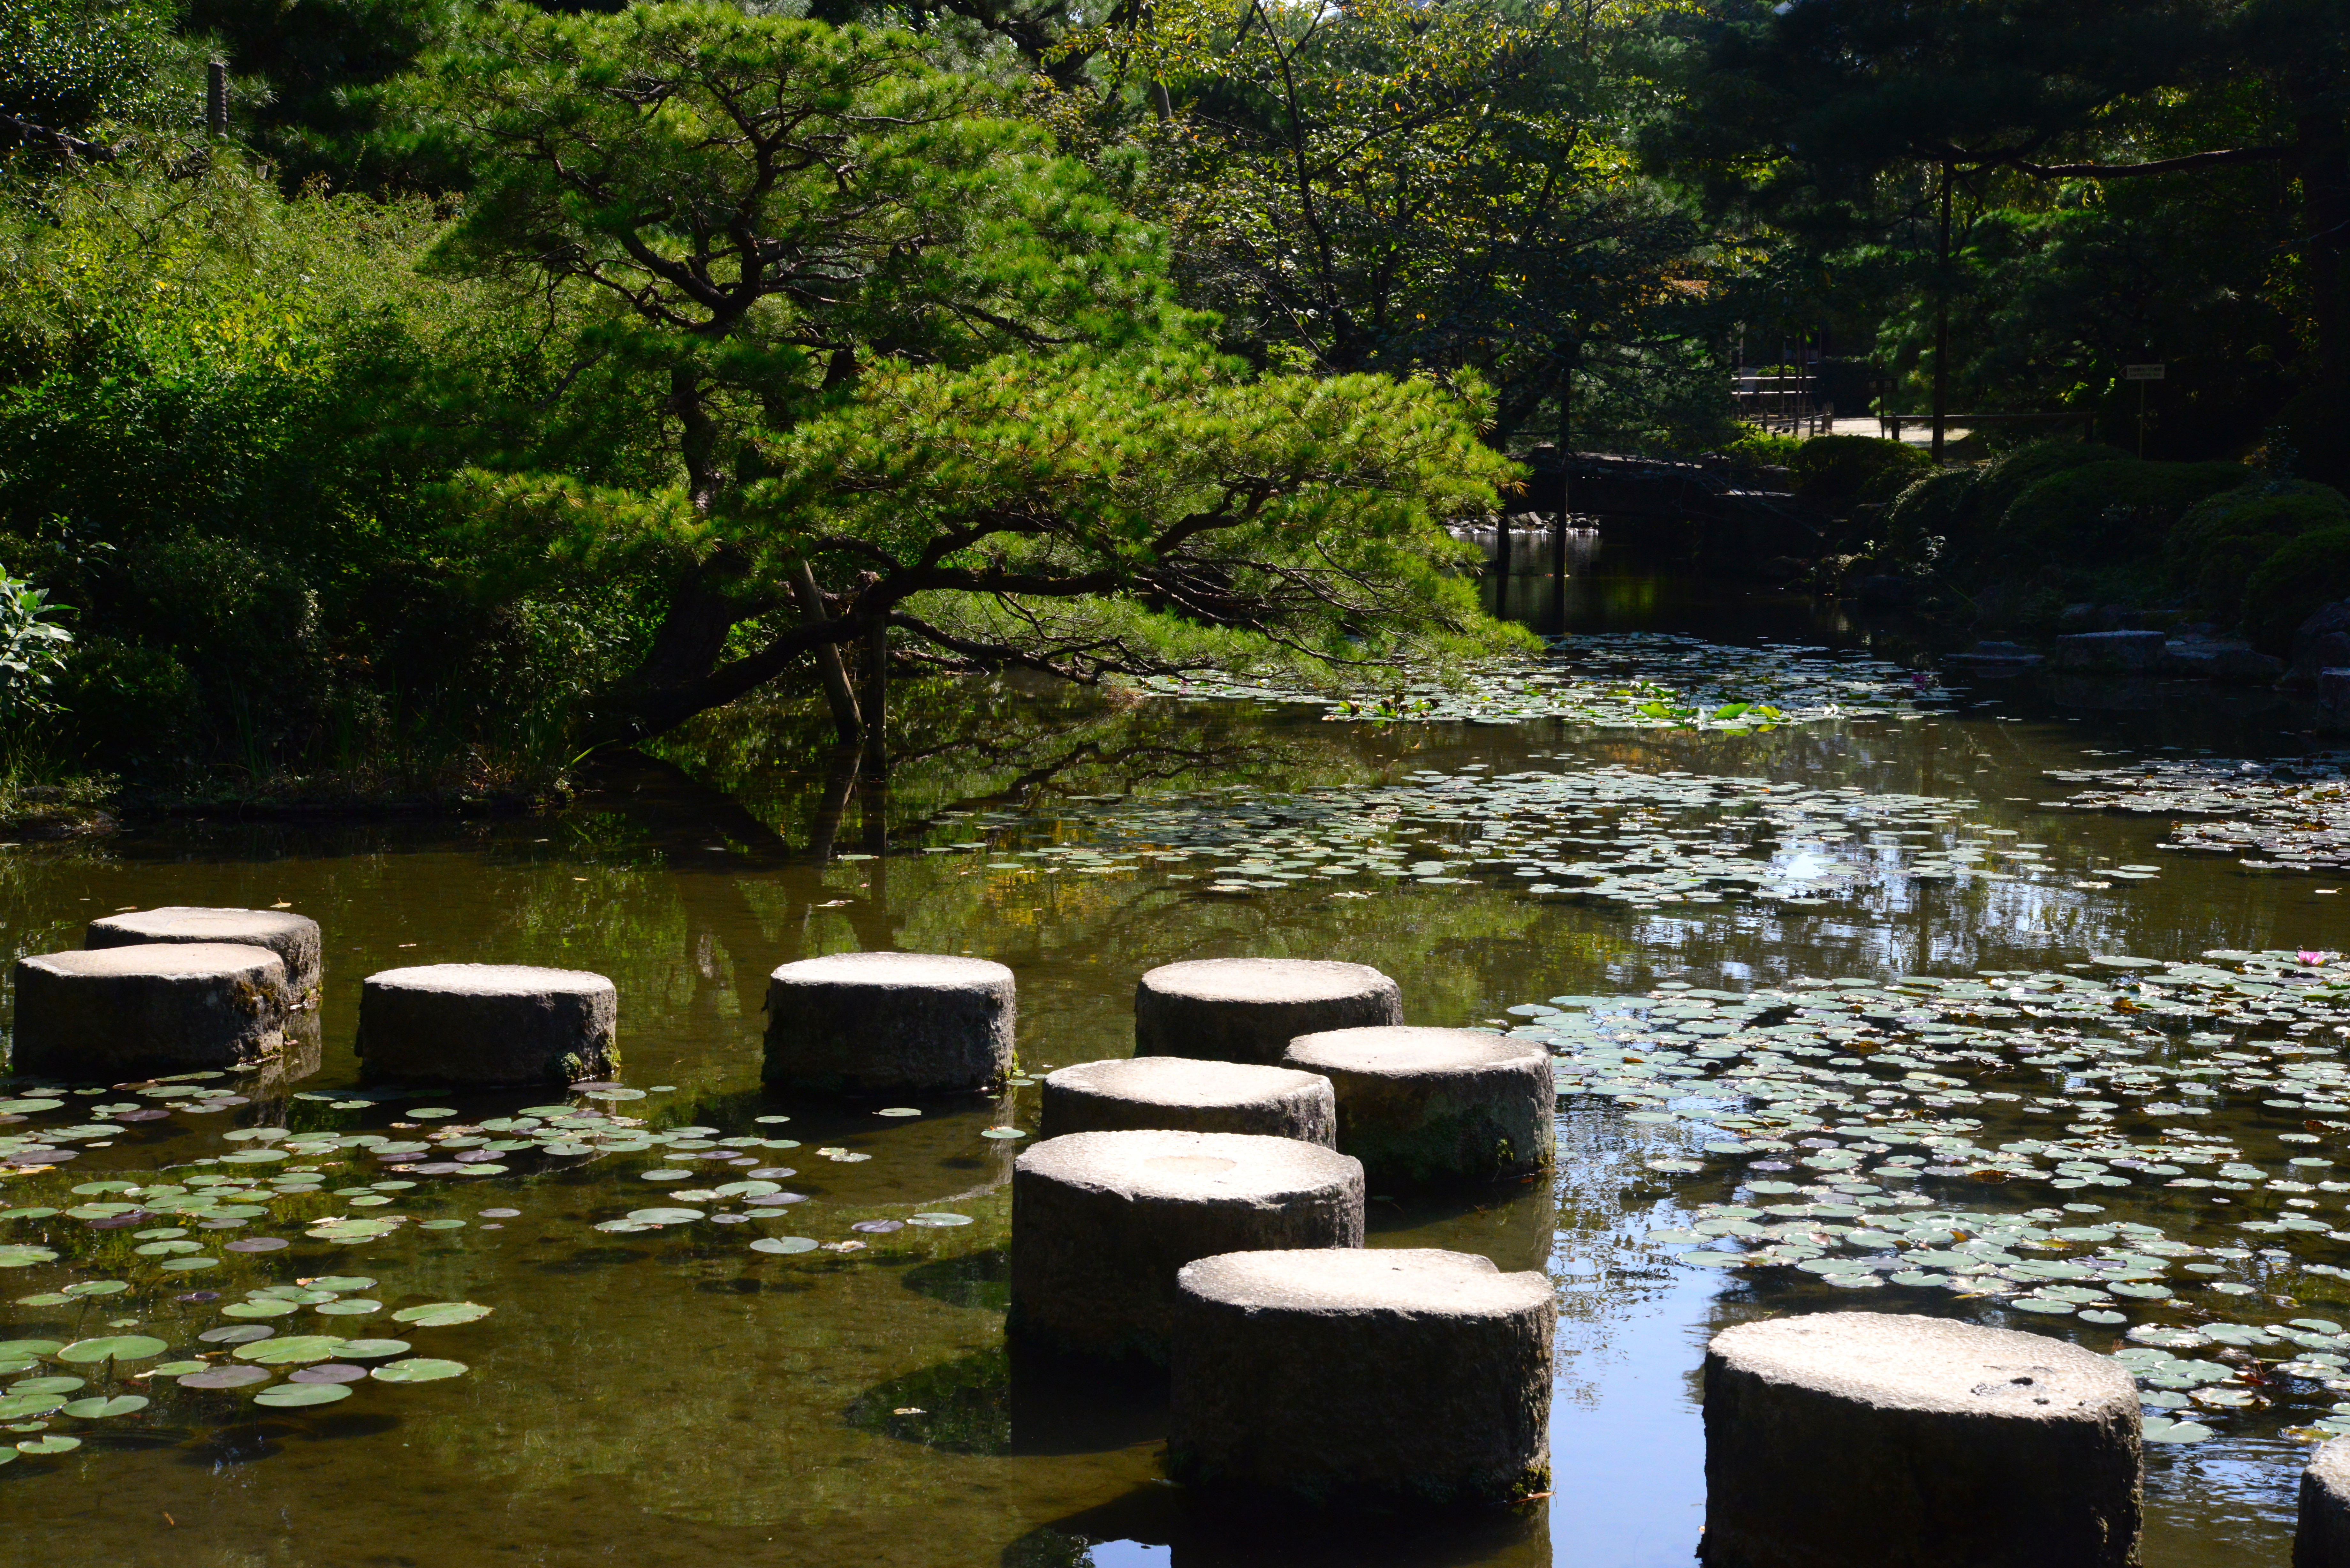 O Jardim do Templo Xintoísta Heian Jingu